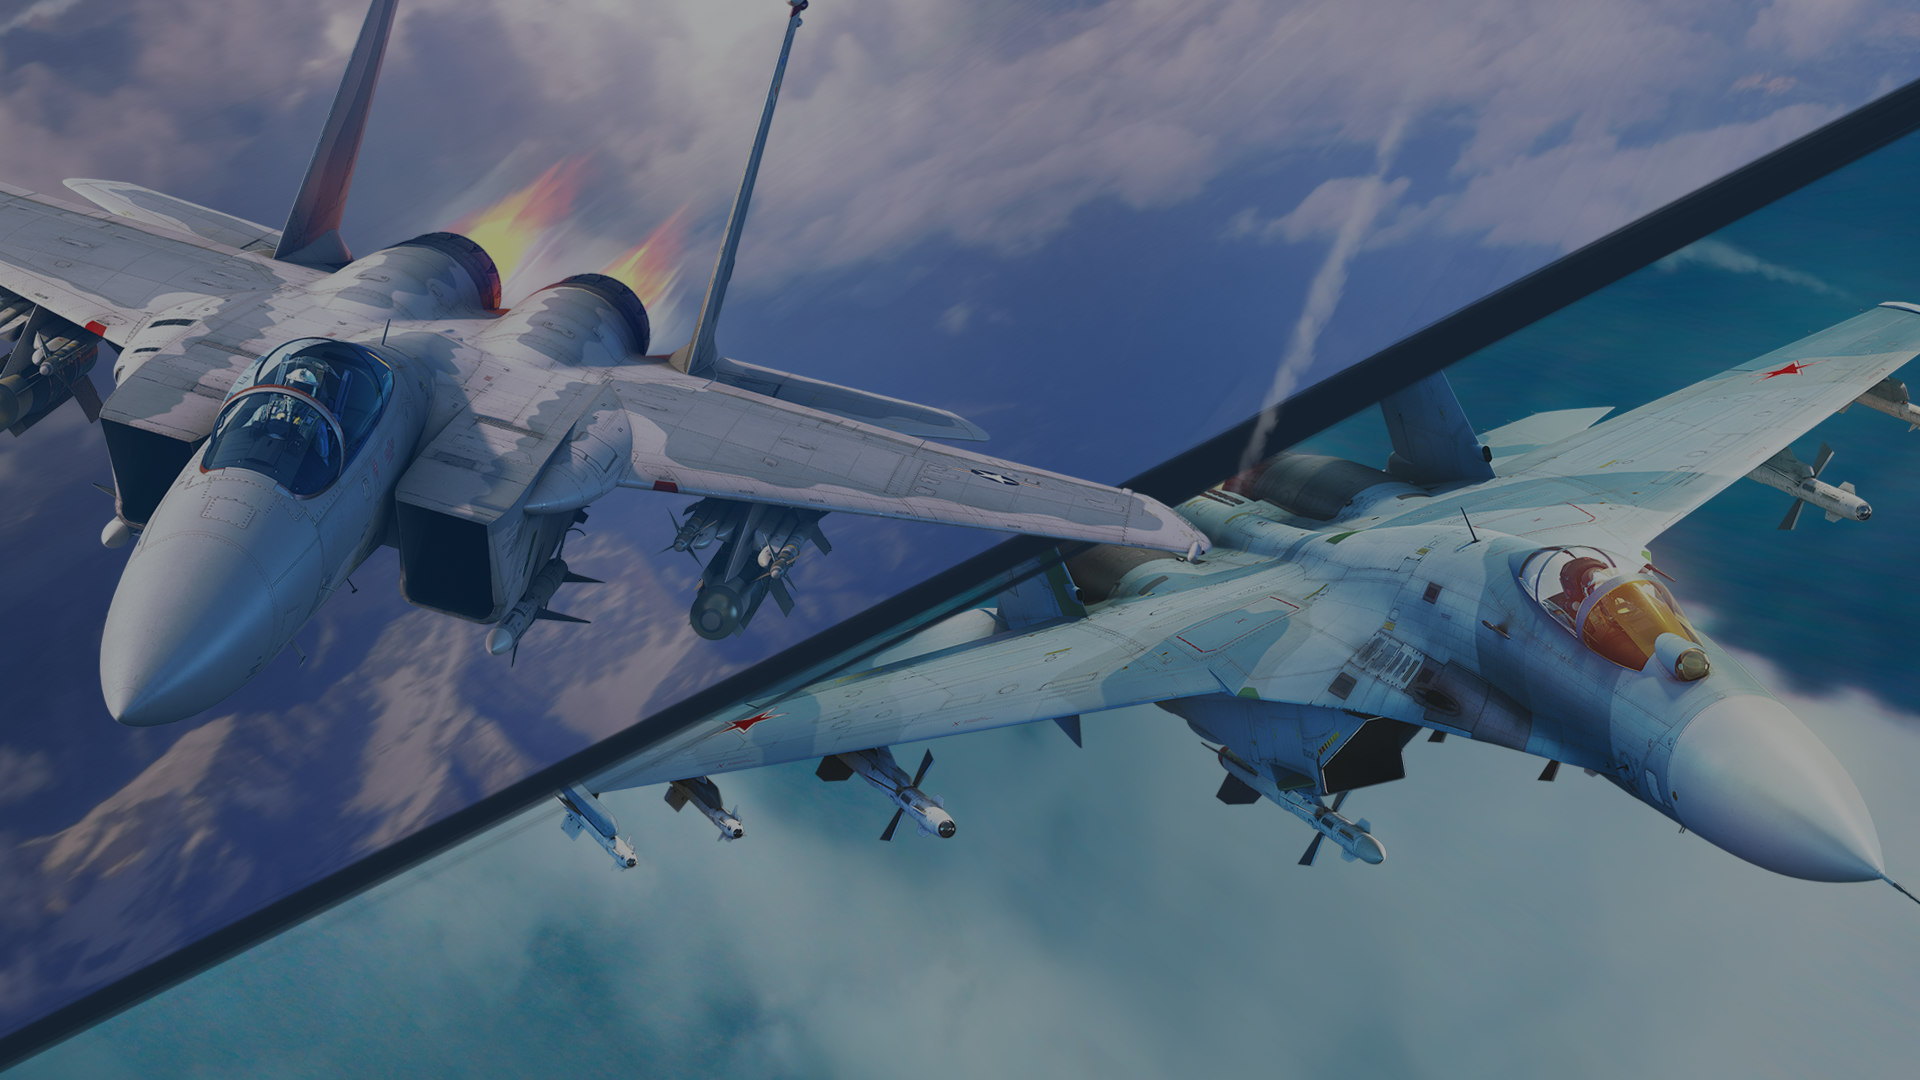 WAR THUNDER – Jogue gratuitamente – Defesa Aérea & Naval